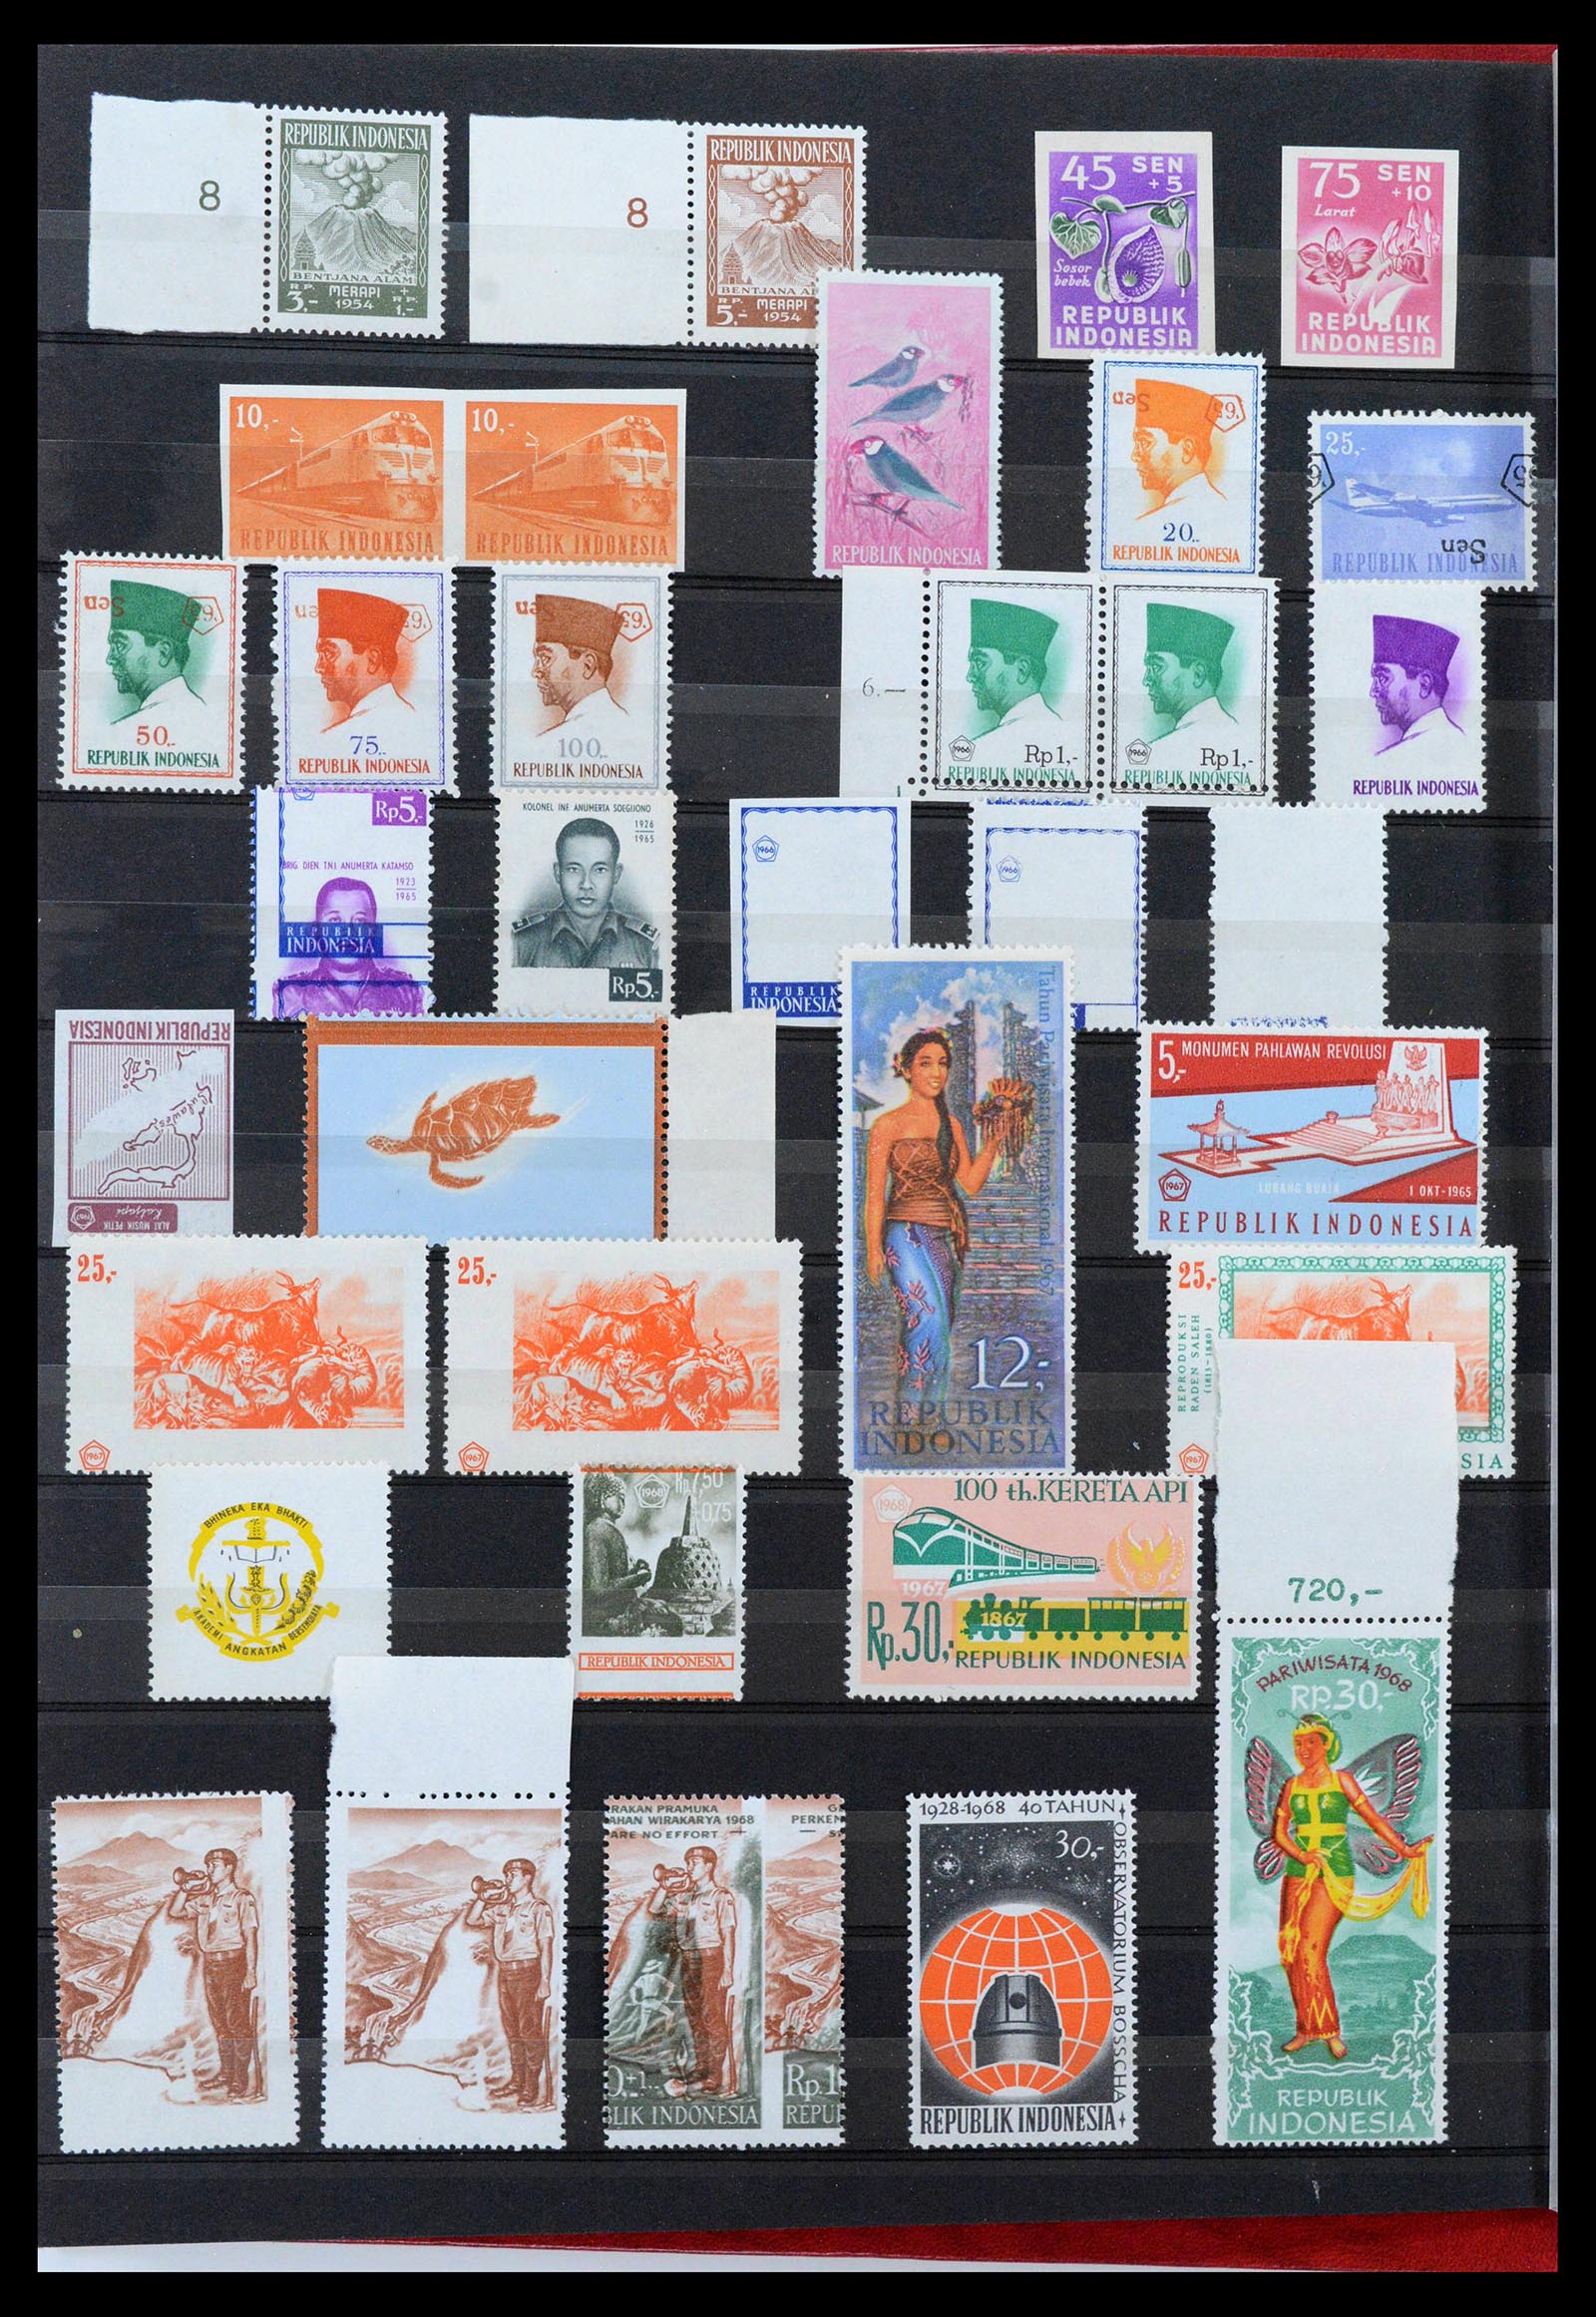 39422 0002 - Stamp collection 39422 Indonesia varieties 1945-1970.